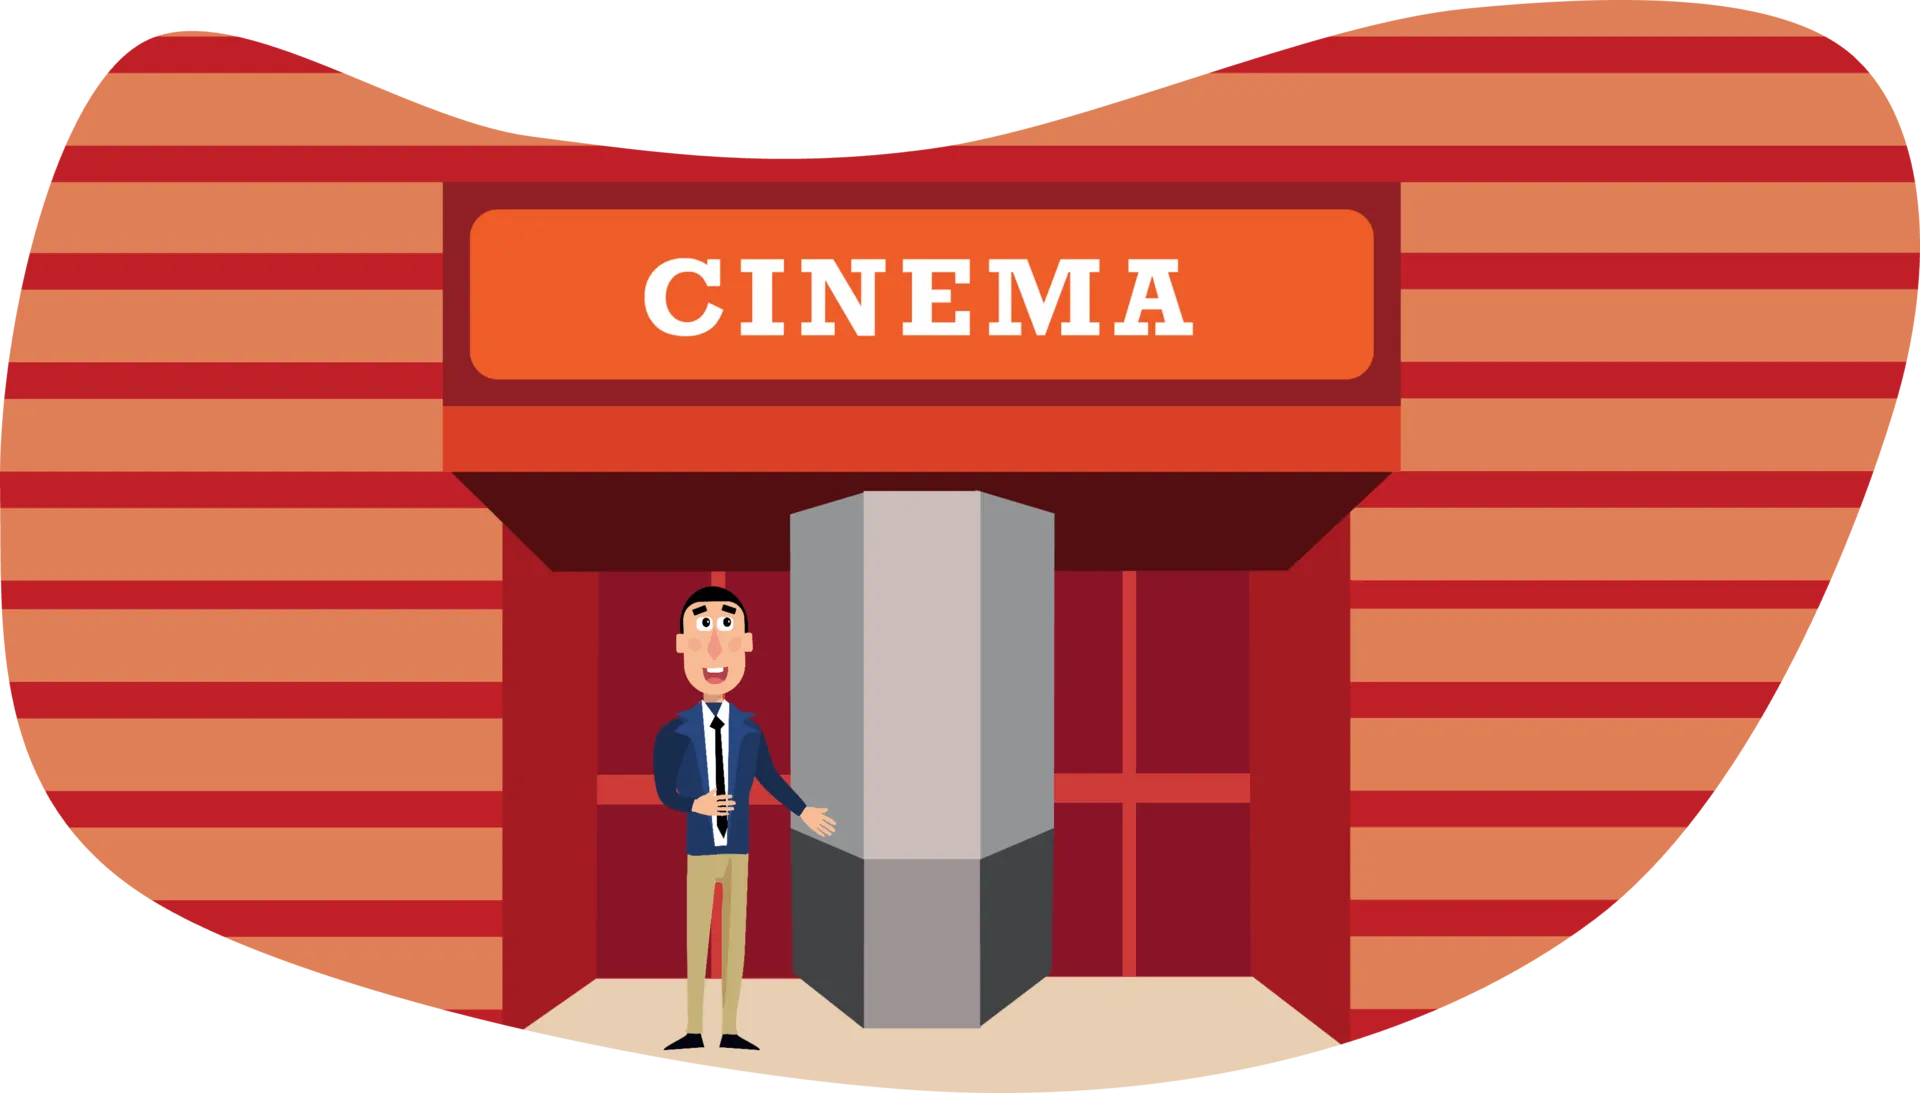 IELTS Speaking Part 1: Cinemas